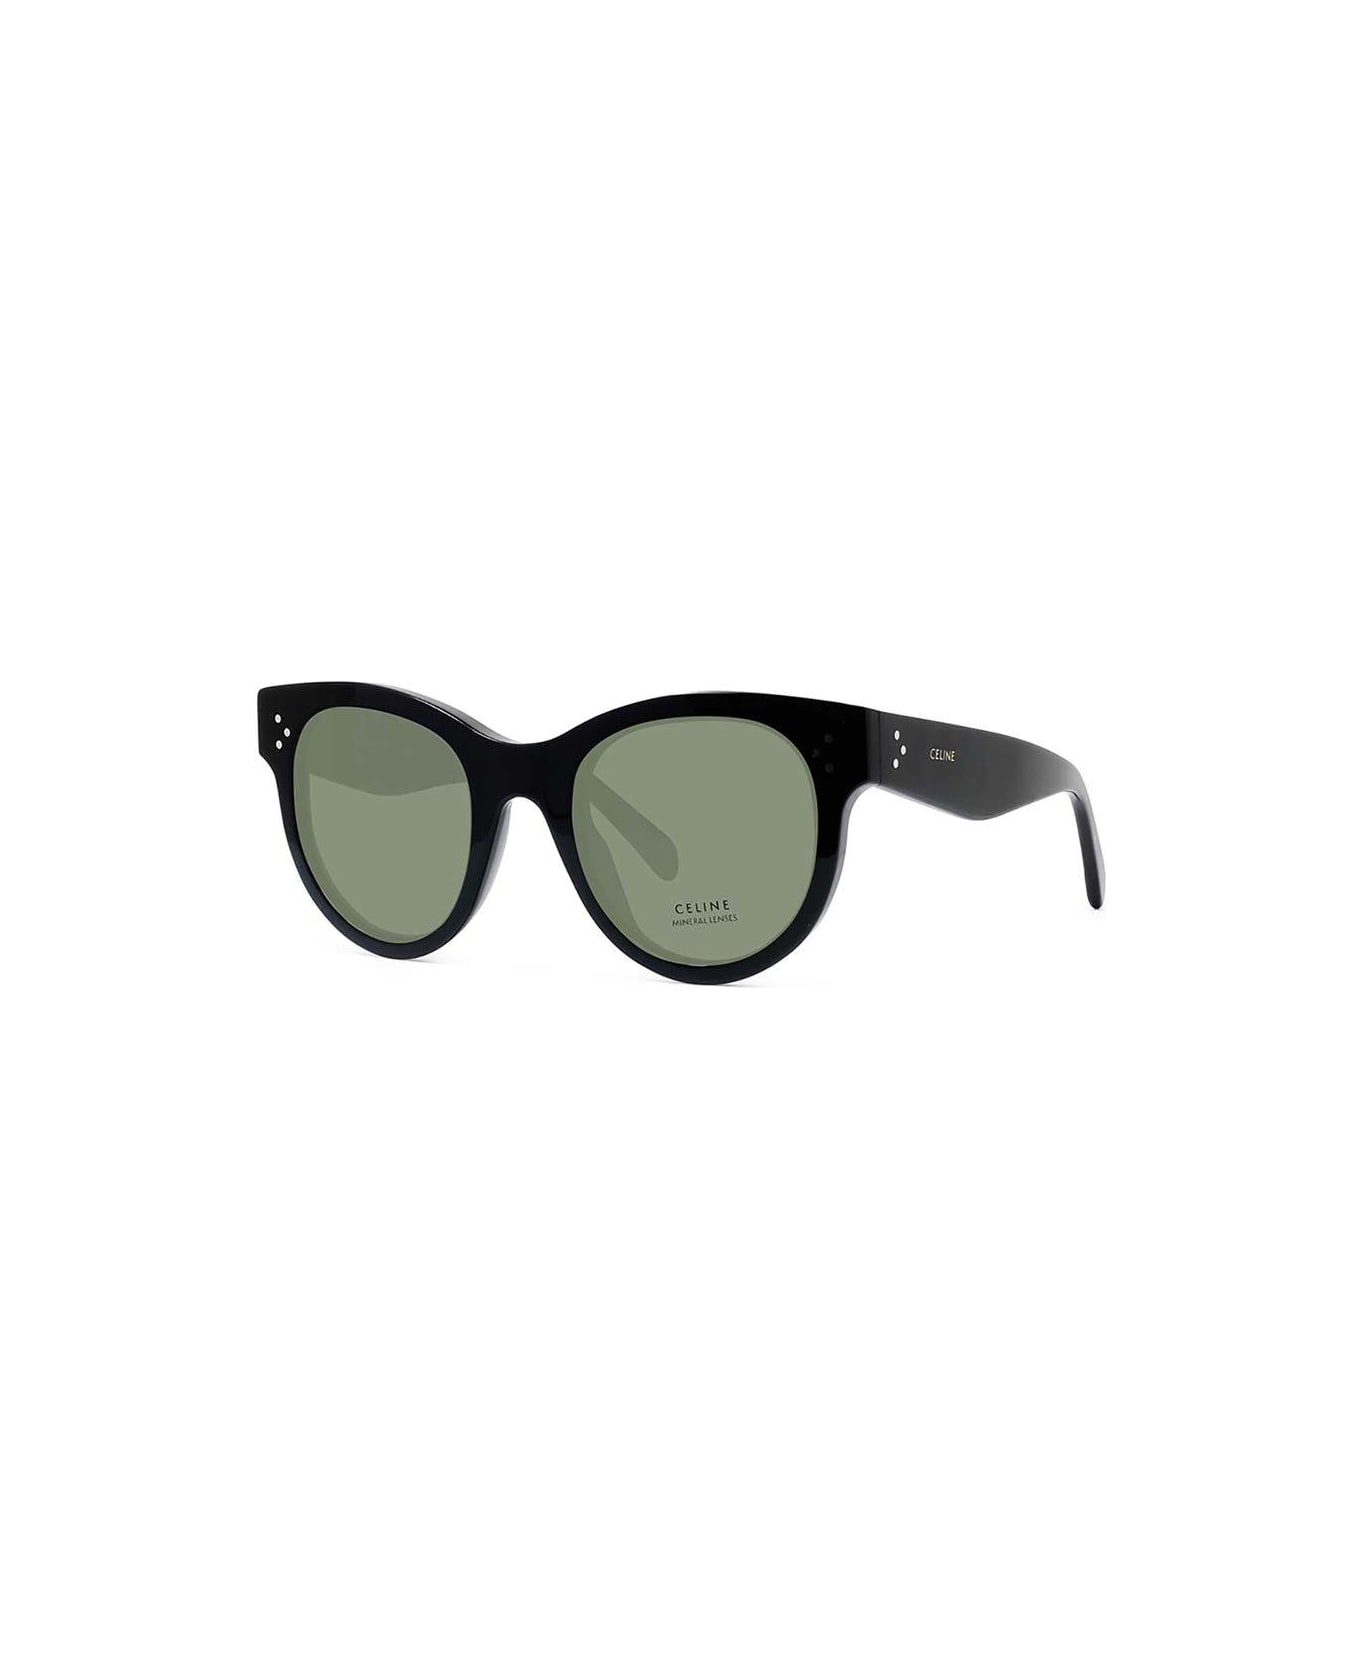 Celine Round Frame Sunglasses - 01a